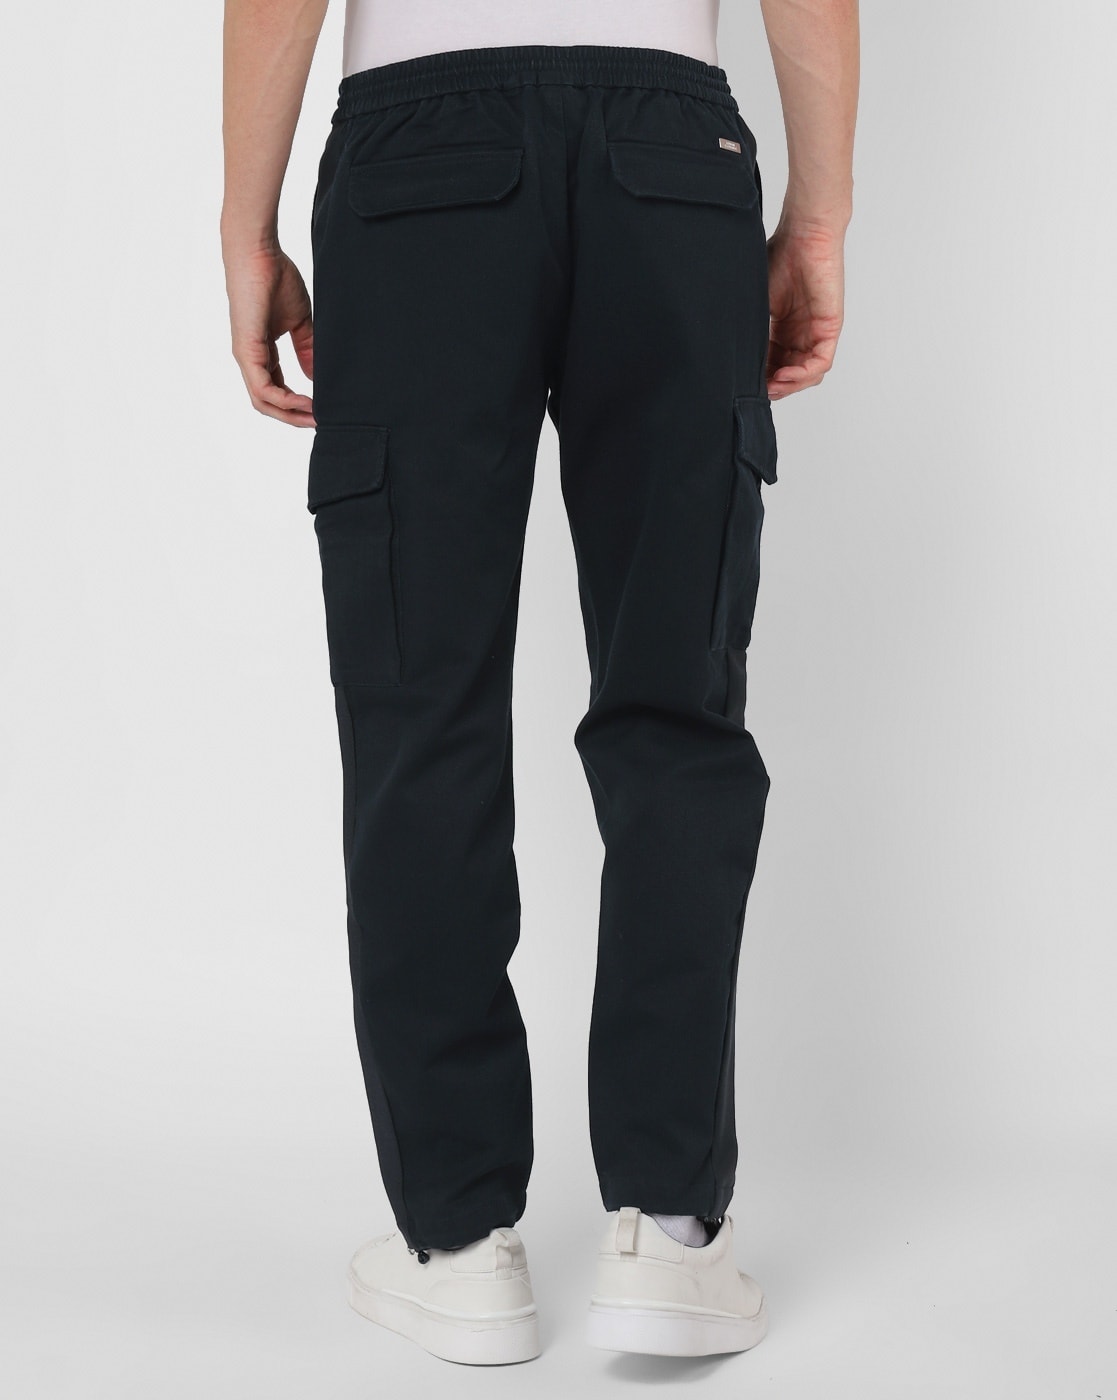 Buy Black Trousers & Pants for Men by AJIO Online | Ajio.com